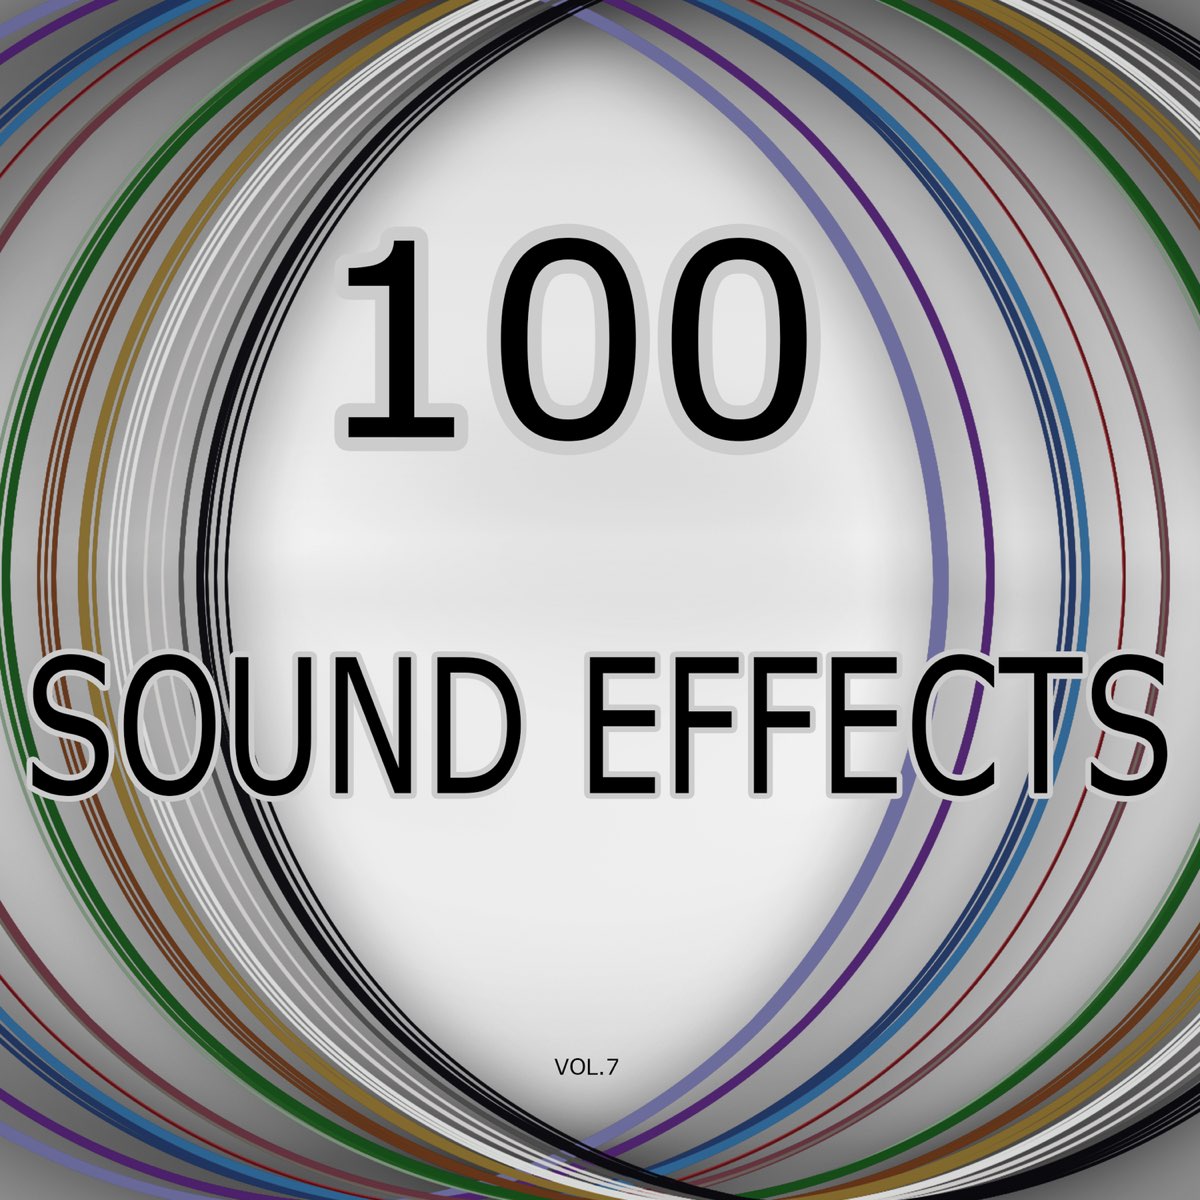 Звуки c 4. Звук на 100. Ll Sound. Group Effects. D4c Sound Effect.